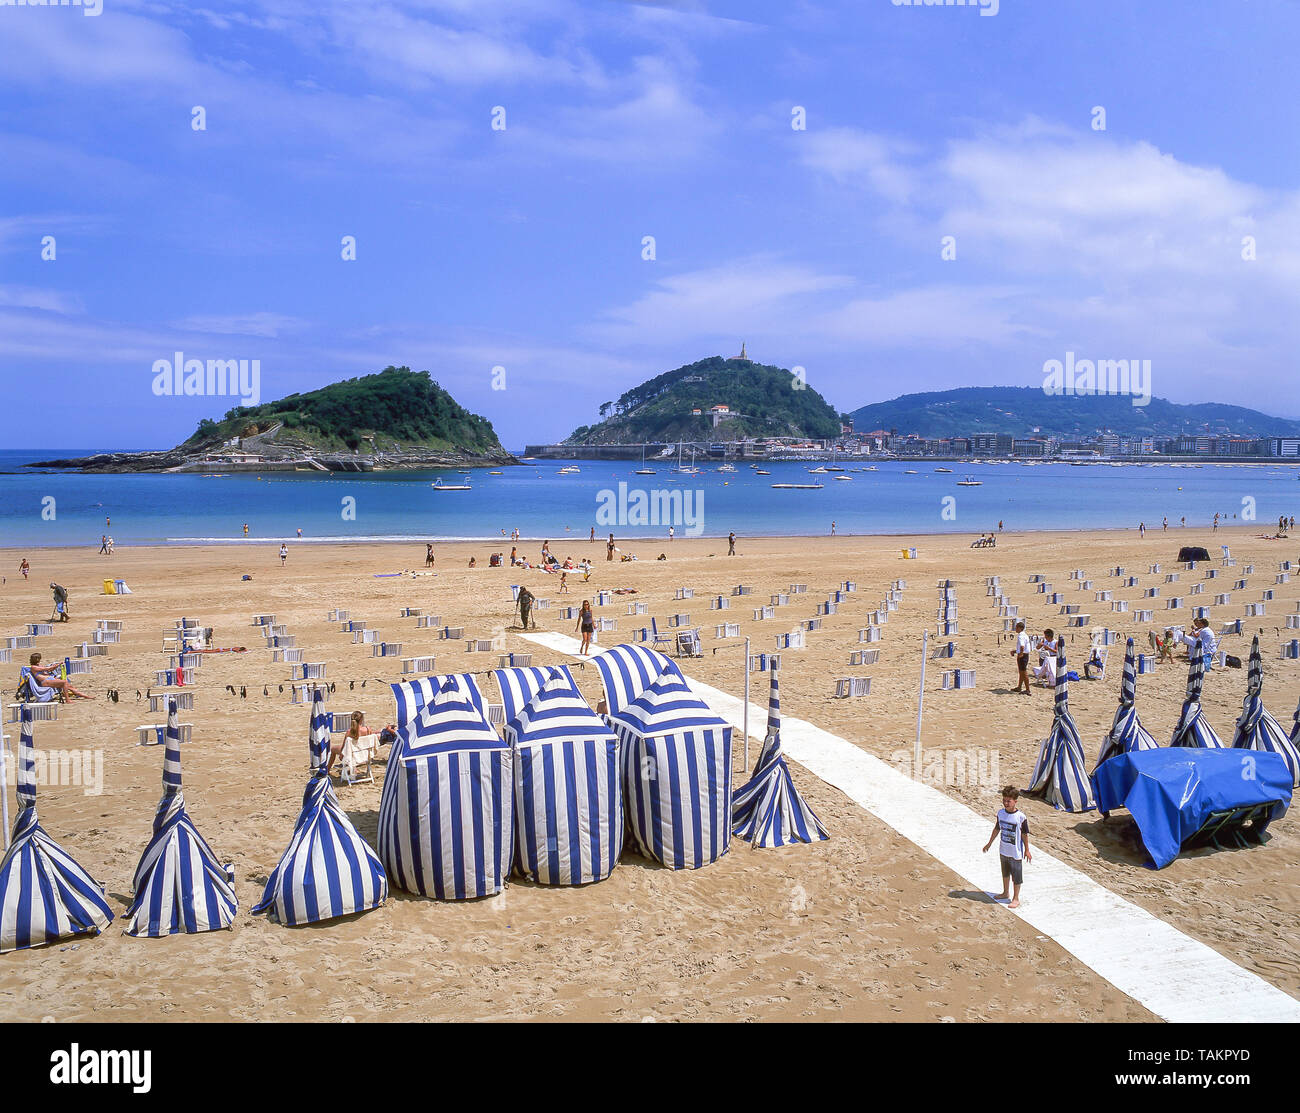 Traditionelle Strand Zelte auf La Concha Strand, Bahia de La Concha, San Sebastian (Donostia), Baskenland (Pai-s Vasco), Spanien Stockfoto